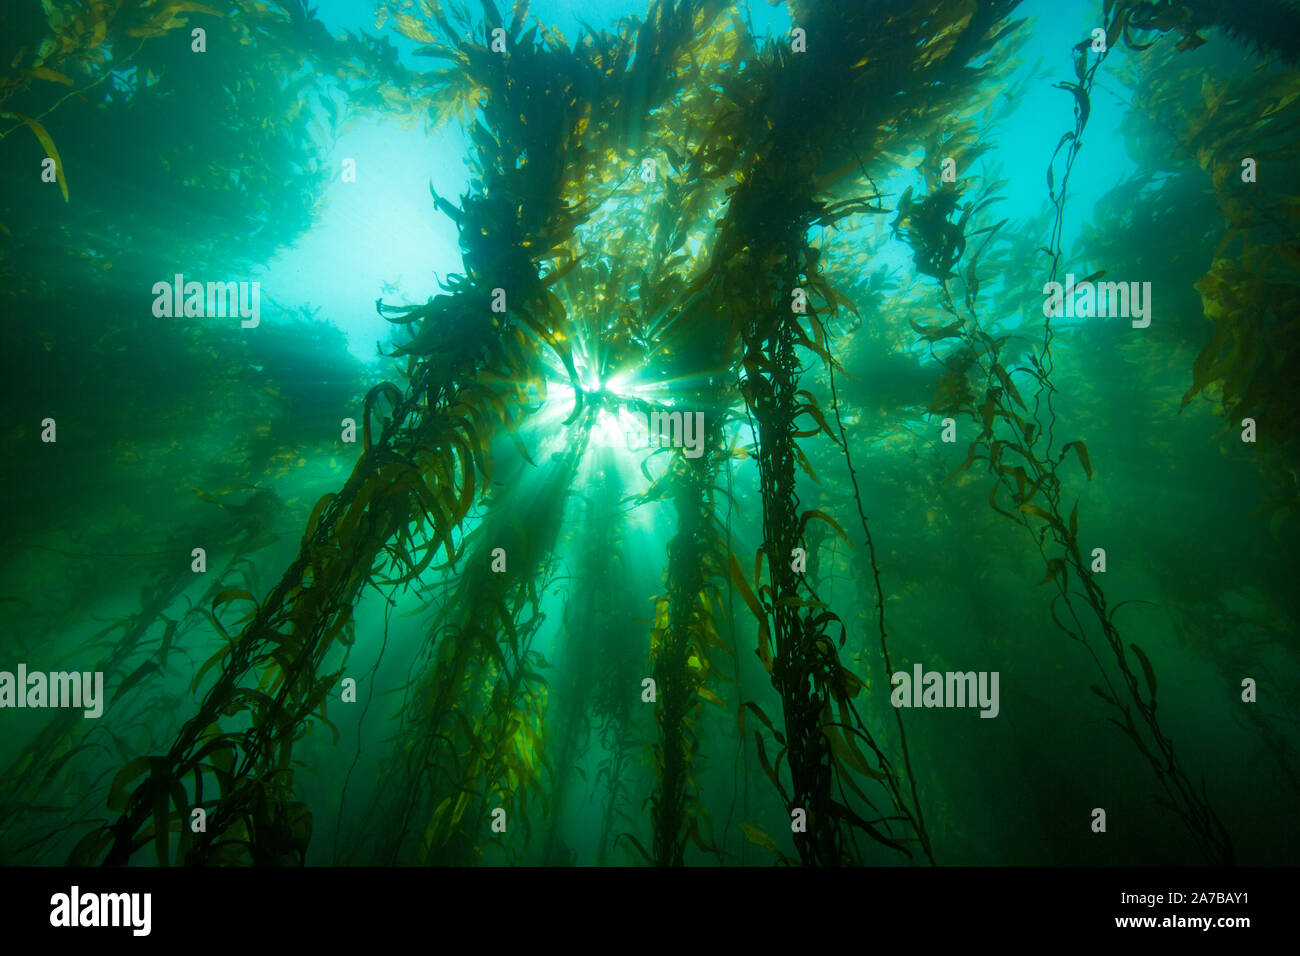 Sunlight streaming through a forest of giant kelp, Macrocystis pyrifera, off Santa Barbara Island, California, USA. Pacific Ocean. Stock Photo